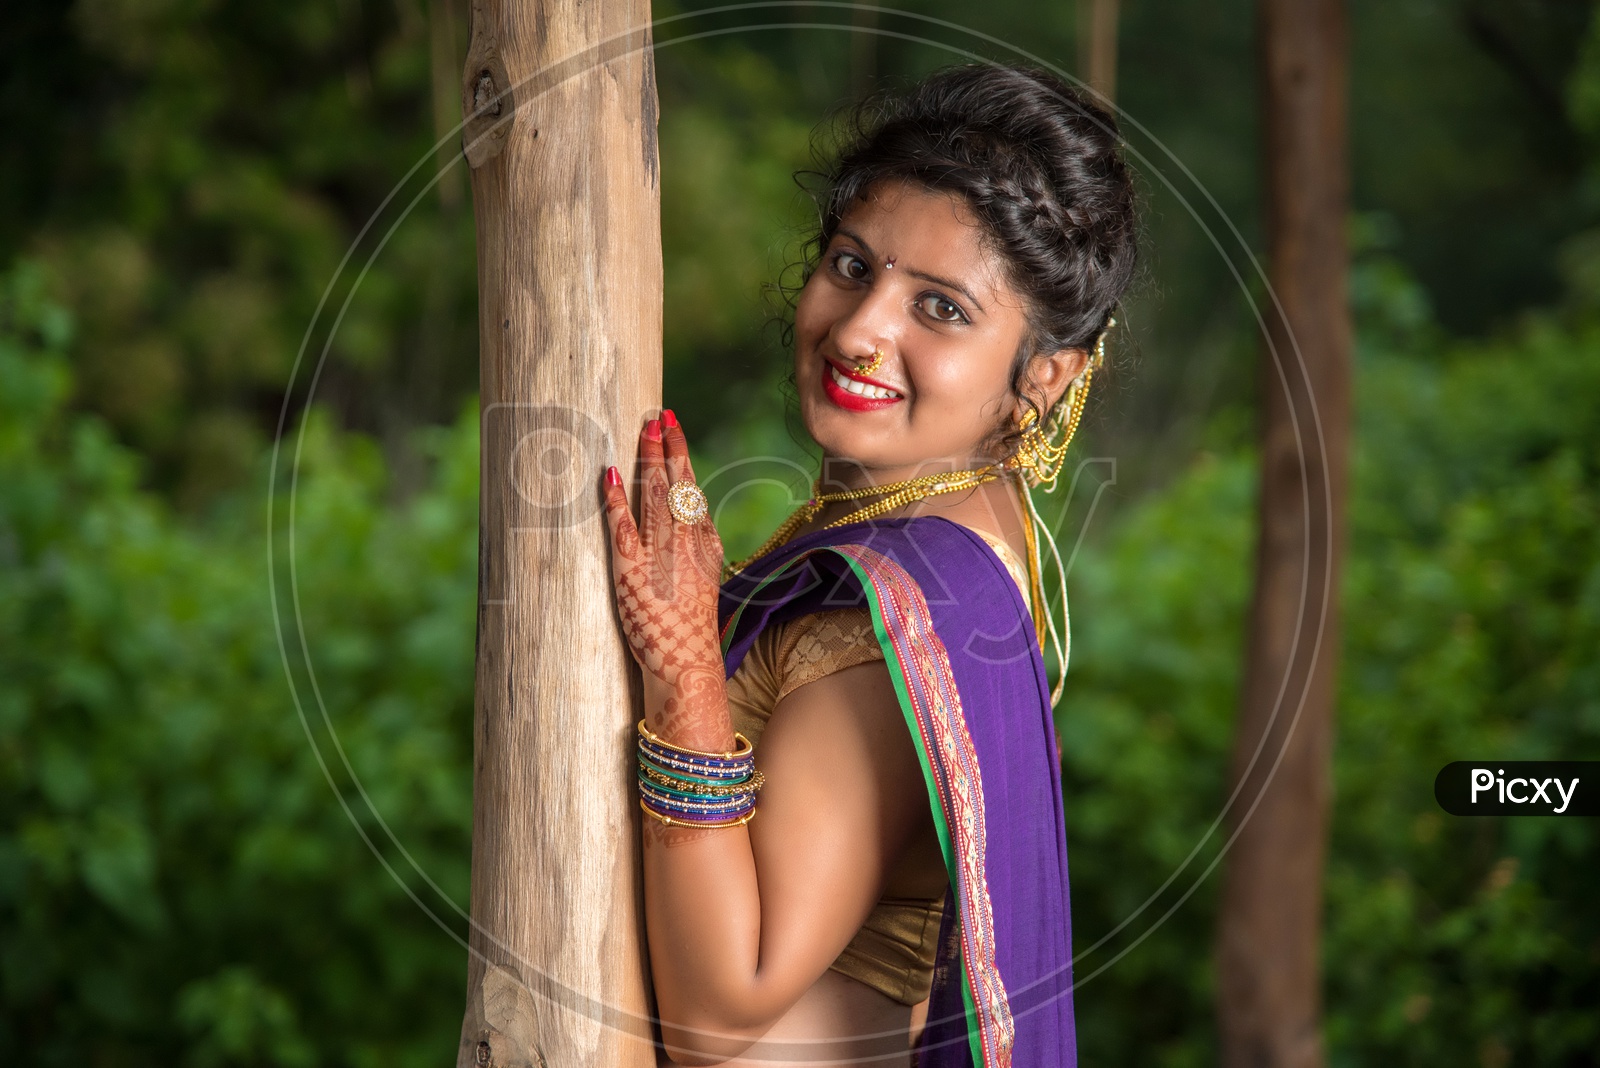 Best Traditional Wedding Photography Poses for Indian Couples |  Weddingdoers – WeddingDoers